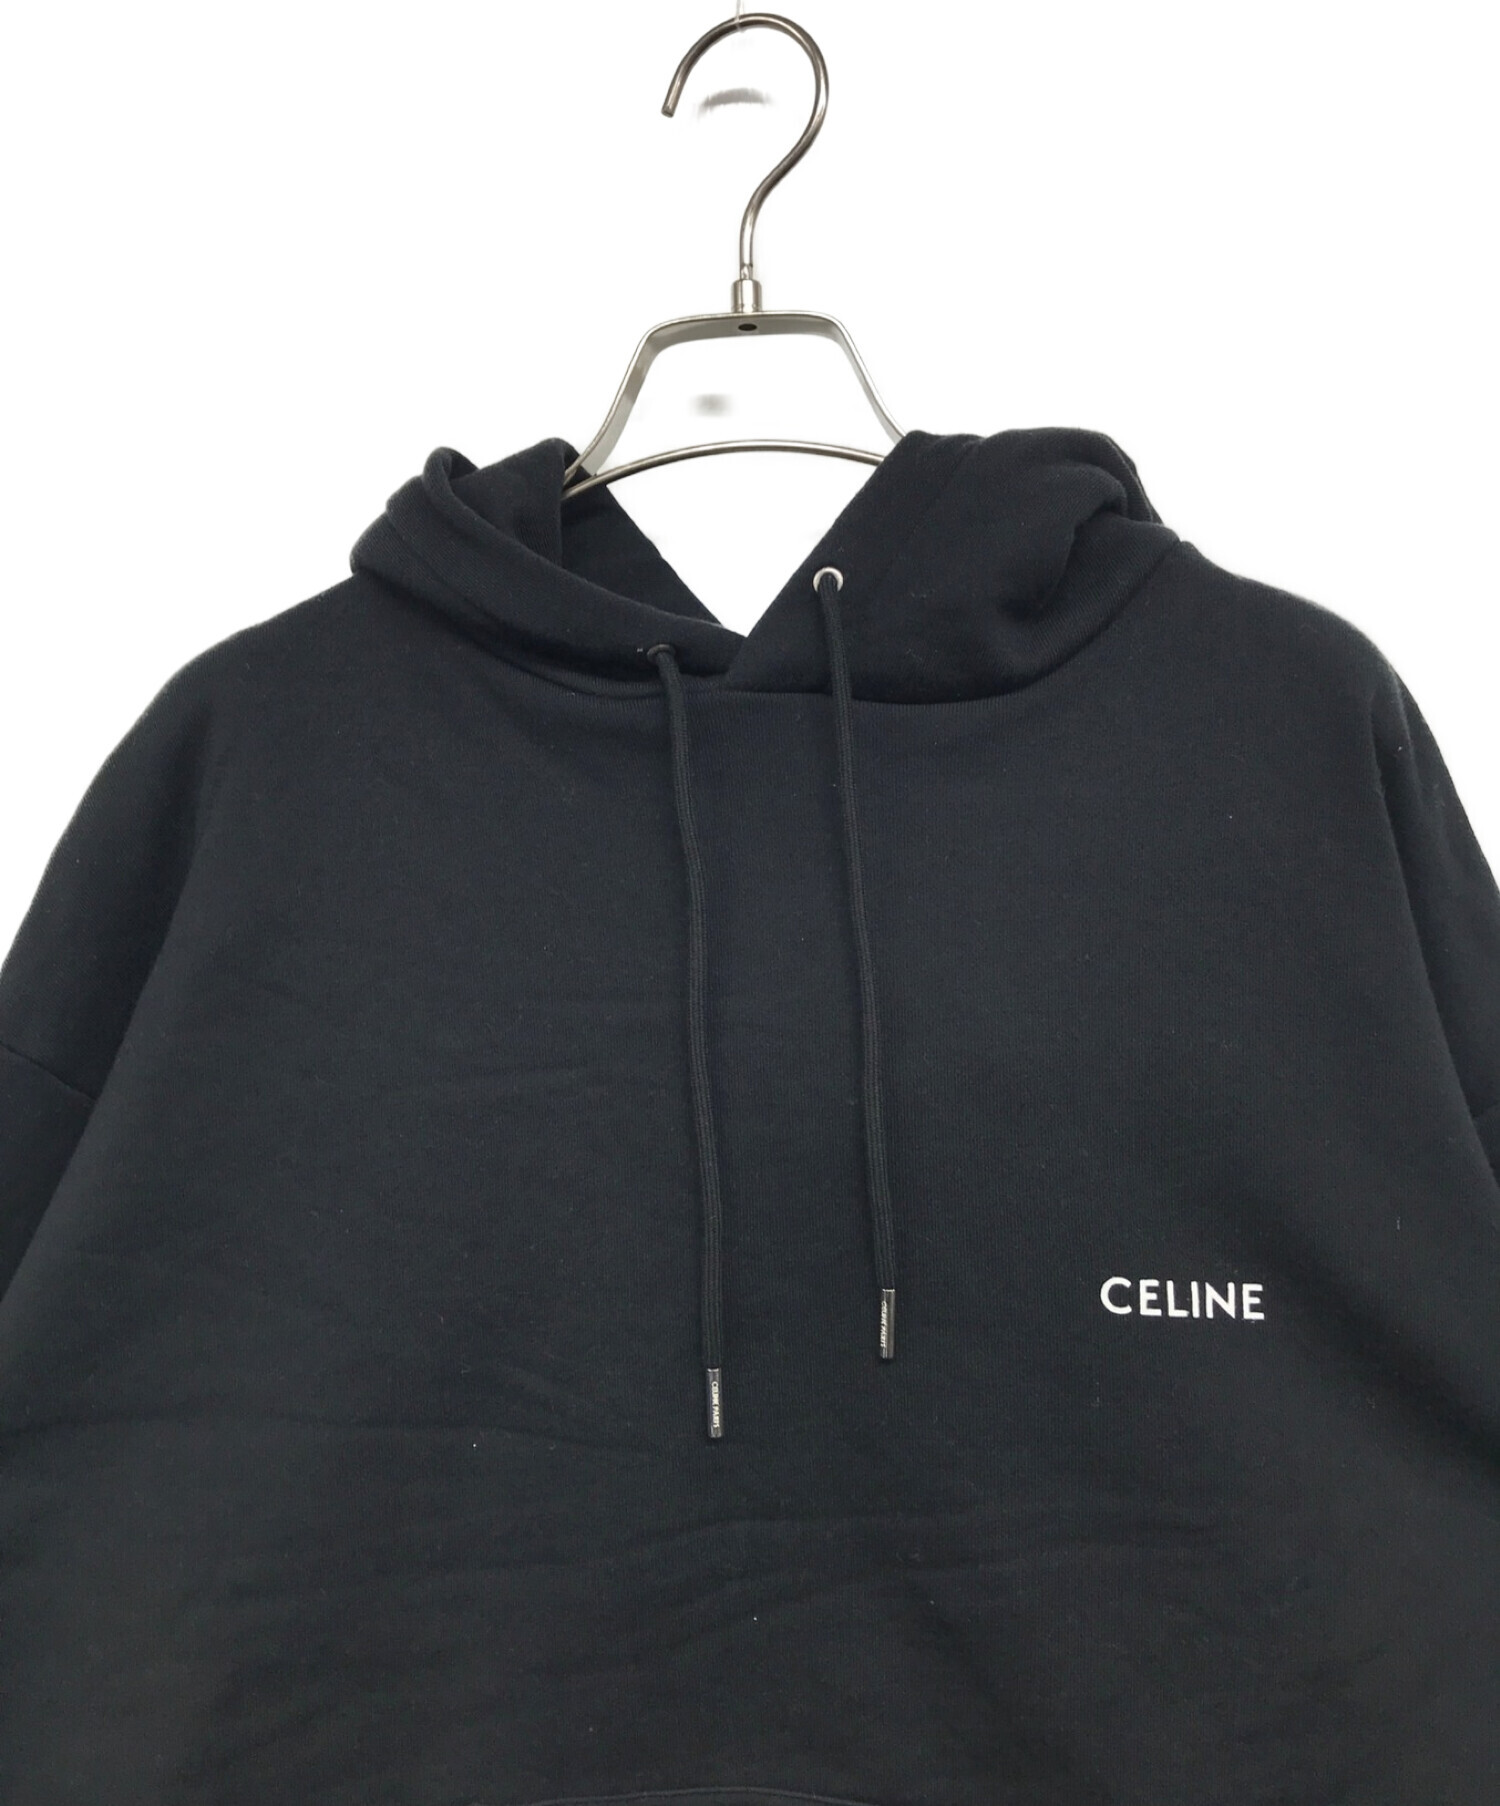 『CELINE』セリーヌ (XL) ロゴプルオーバーパーカー / ブラック